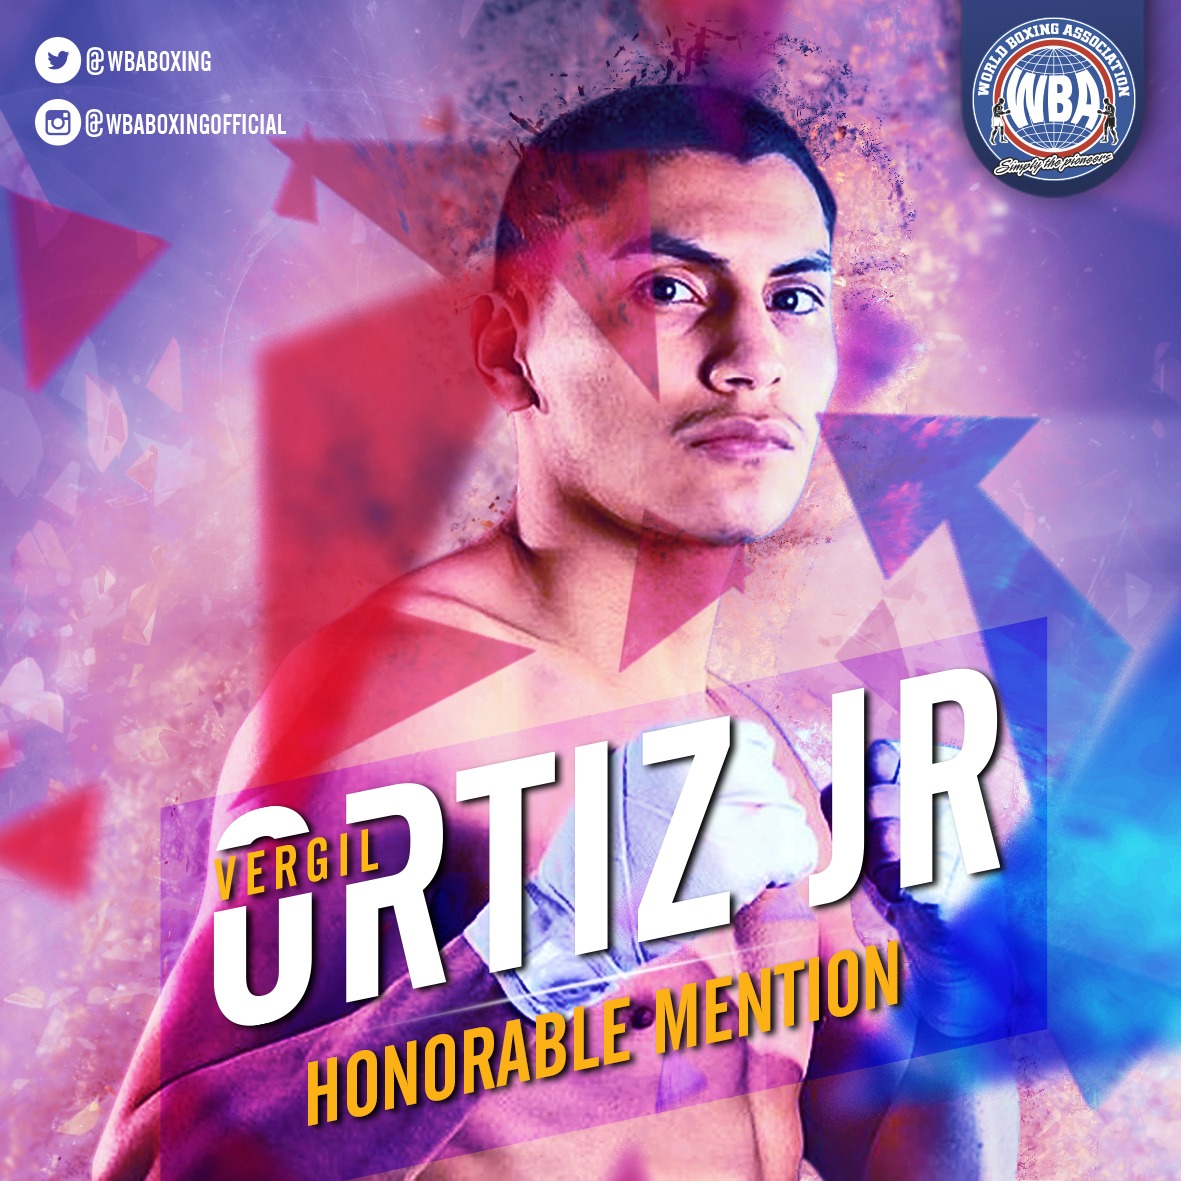 Vergil Ortiz Jr.– WBA Honorable Mention August 2019